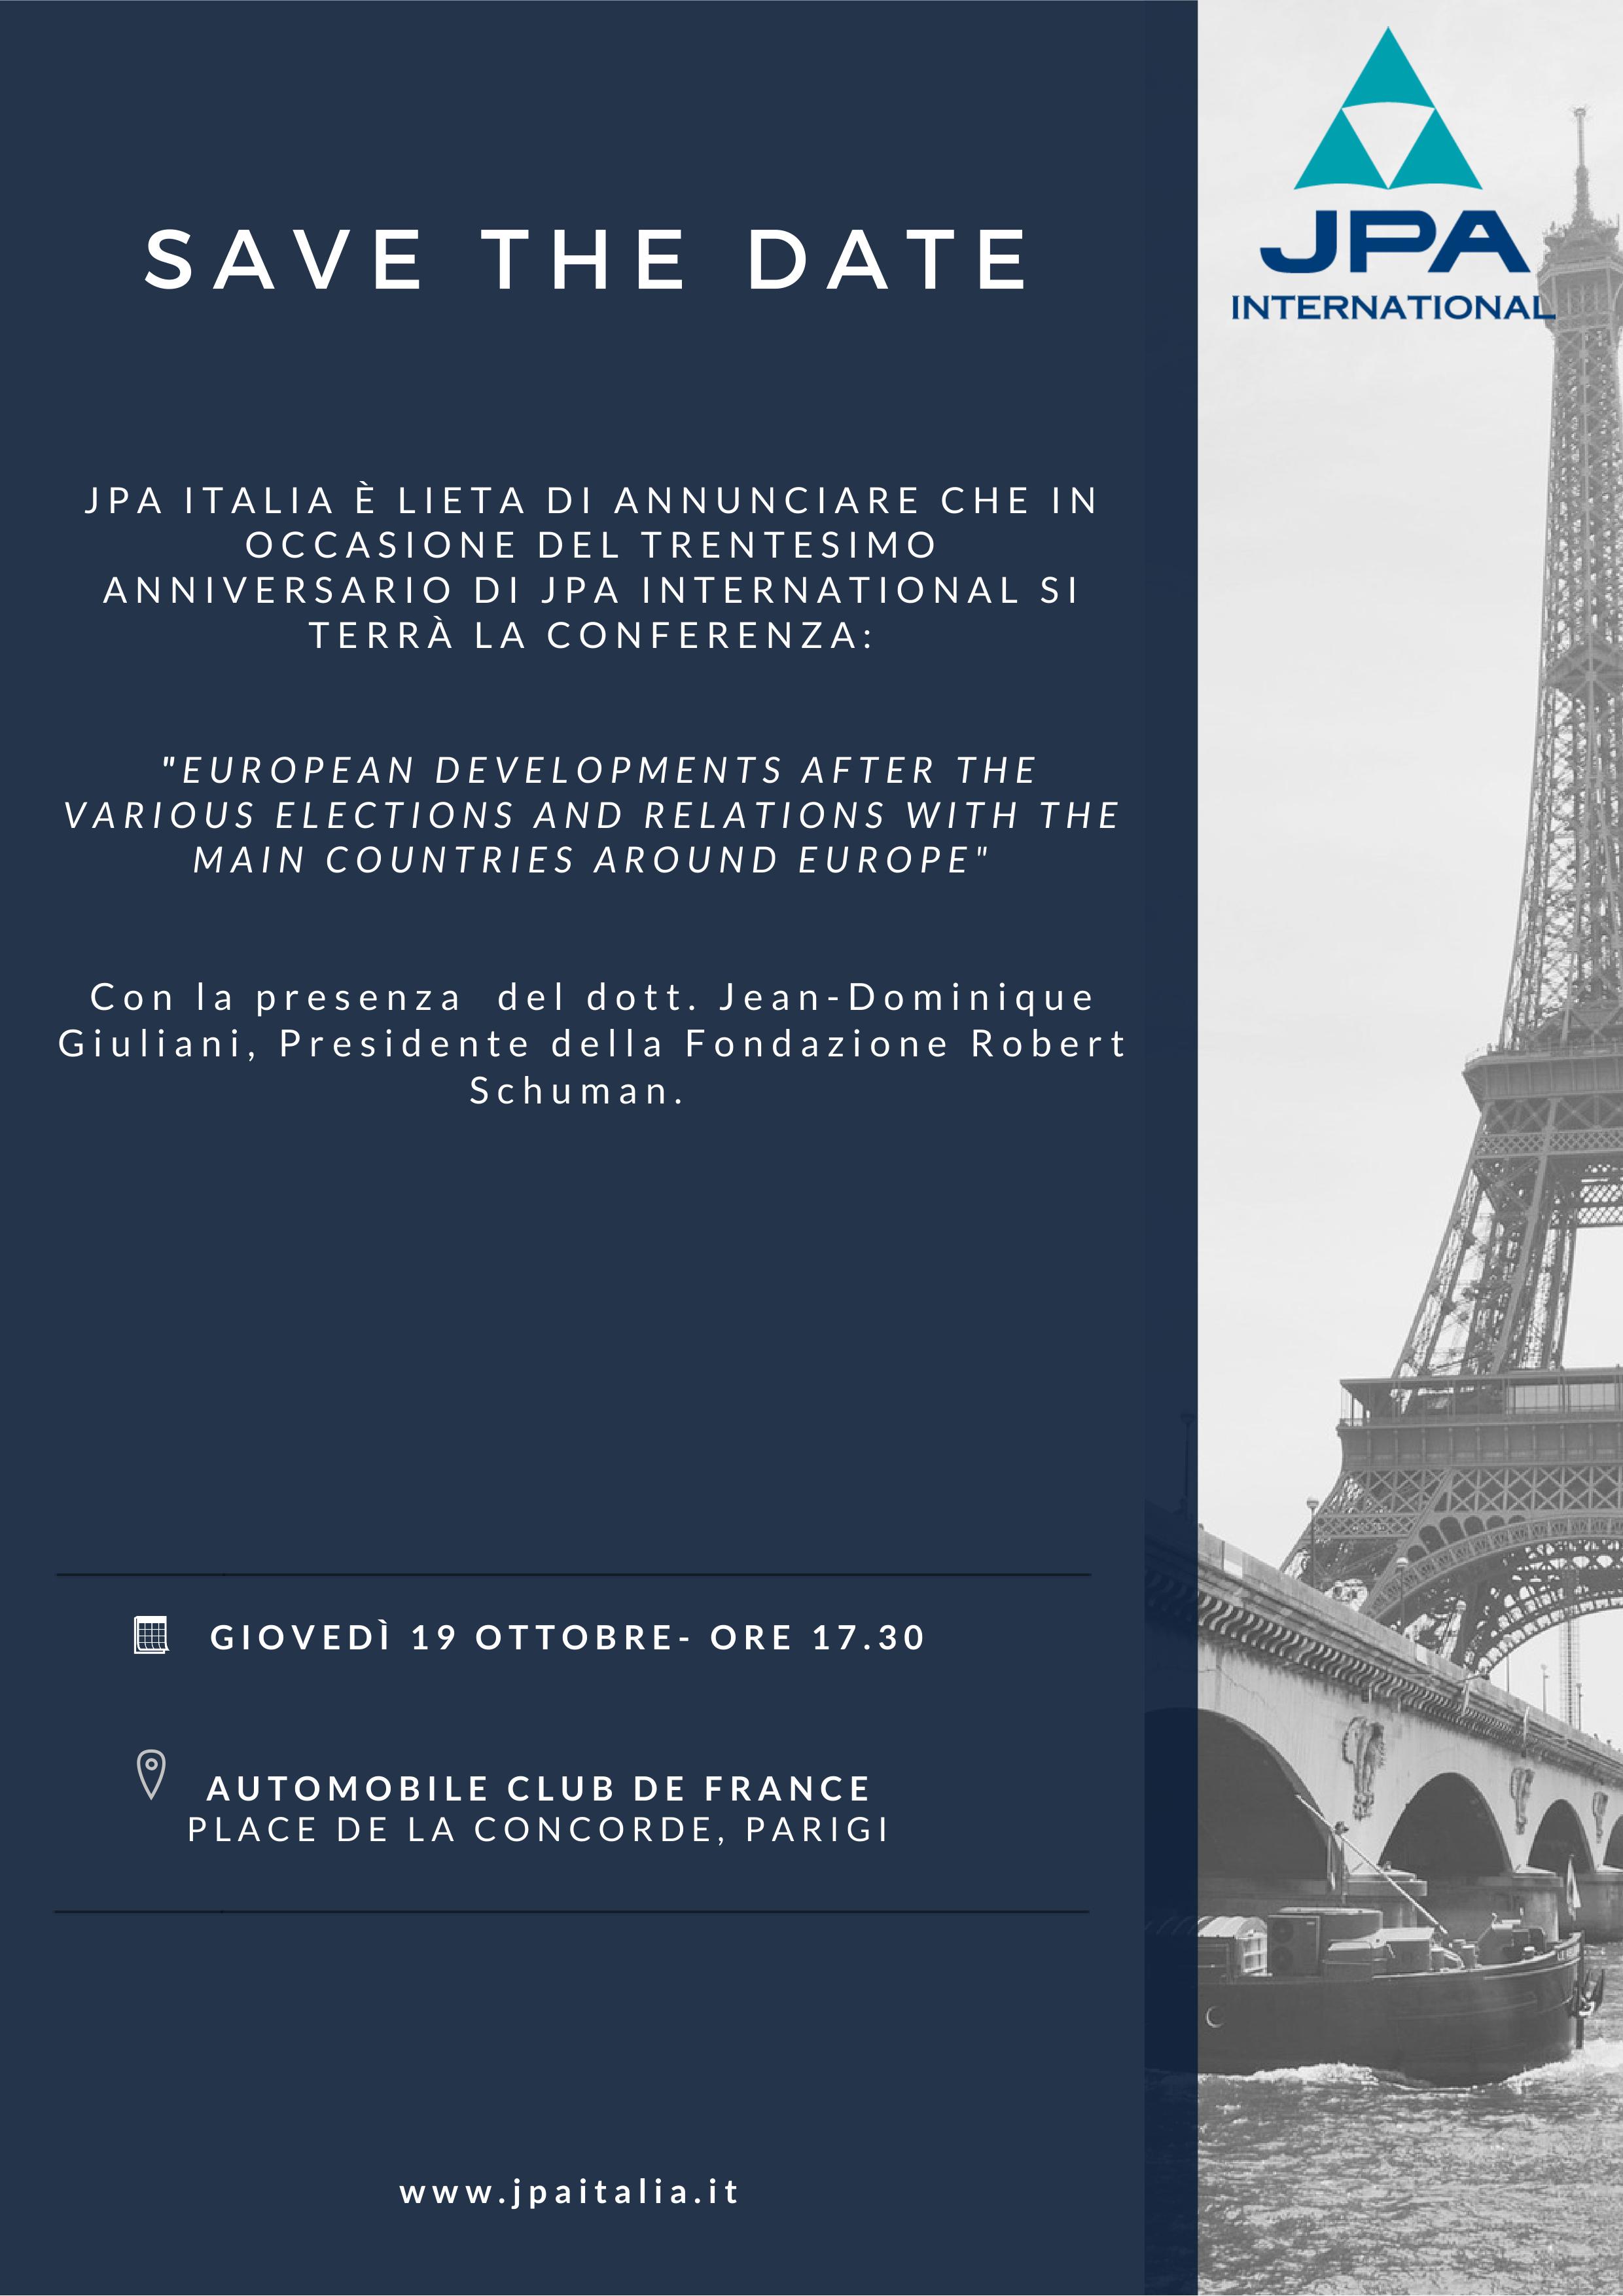 JPA Italia - SAVE THE DATE  - October, 19 2017